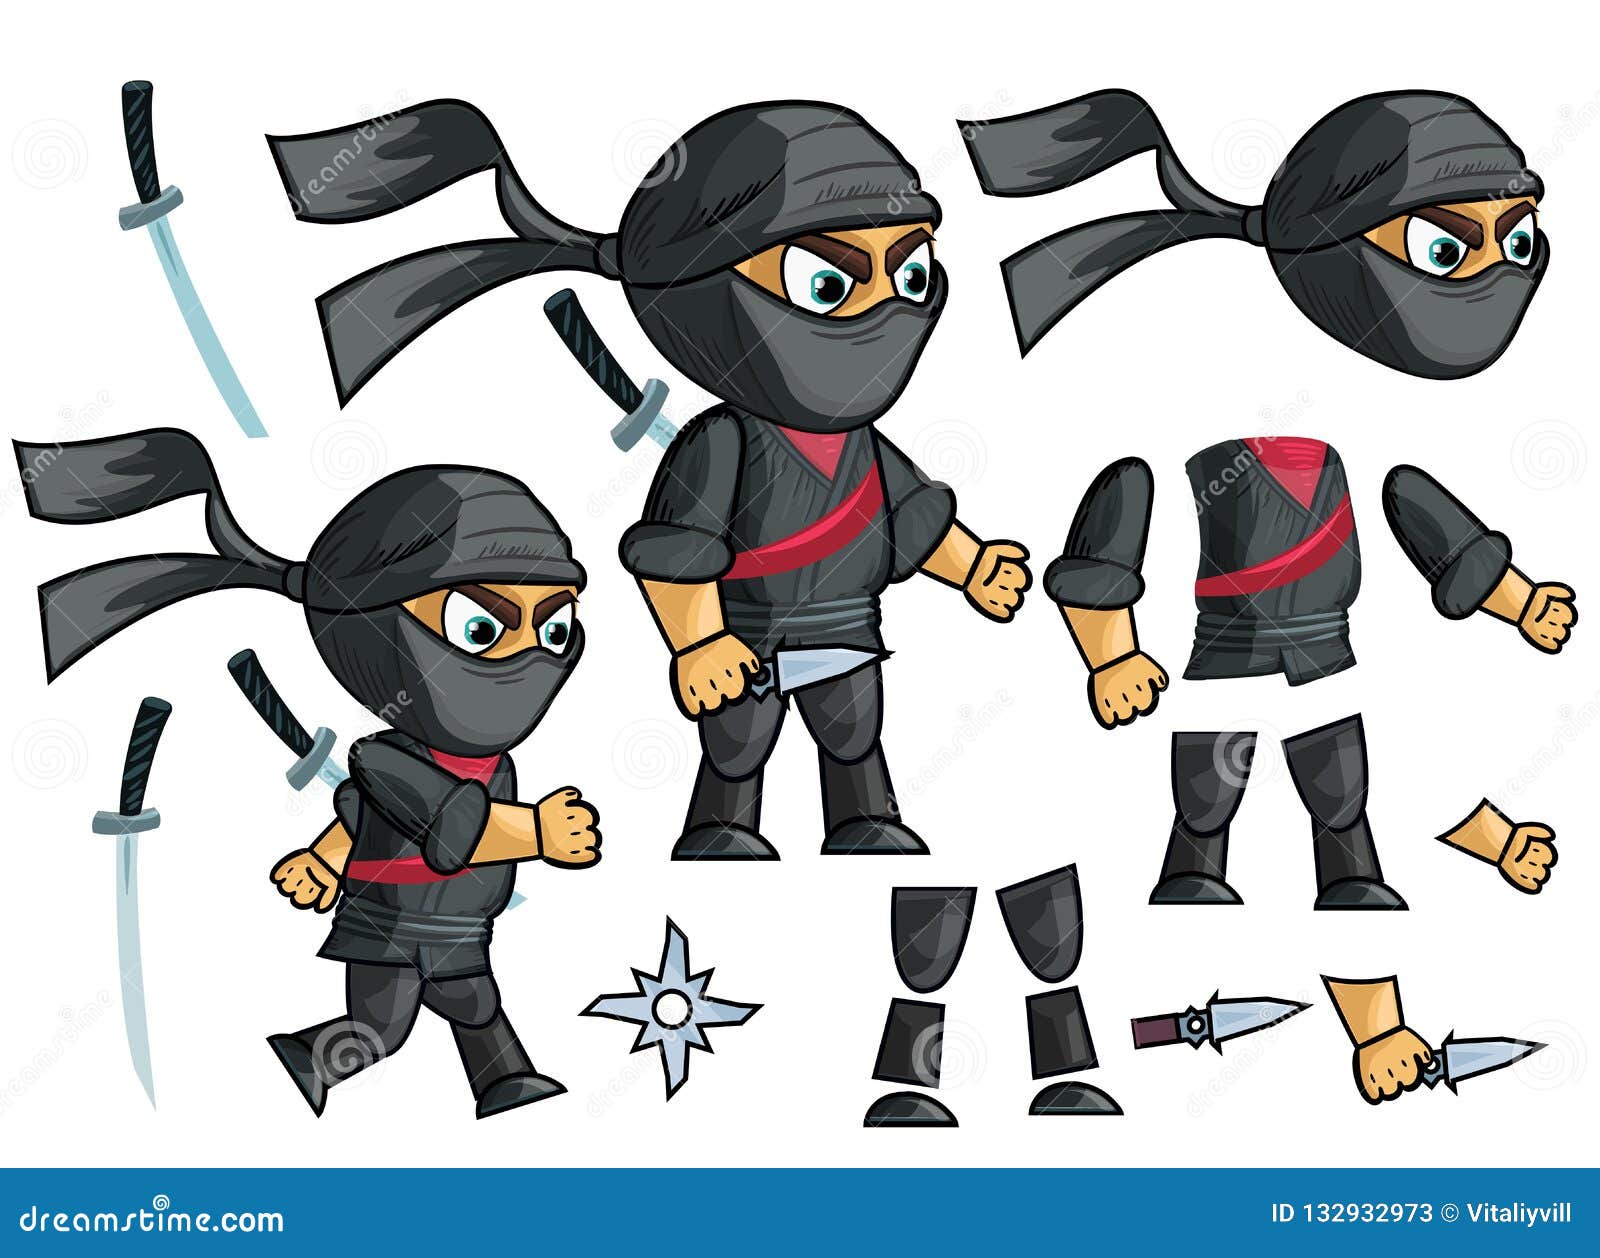 Ninja Animation Package Free Download